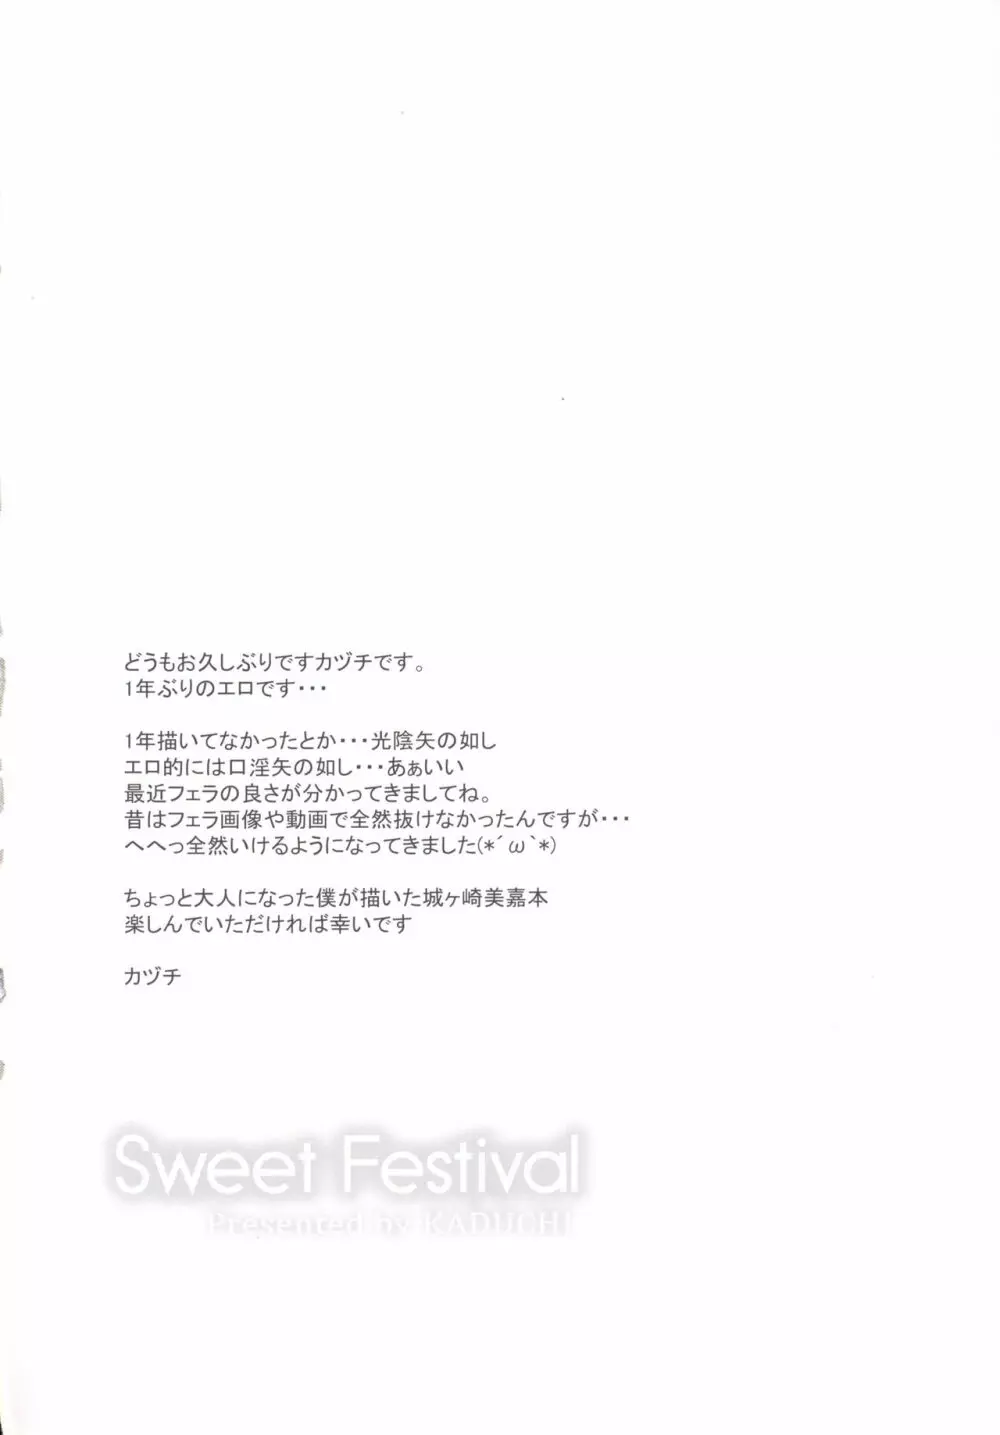 Sweet Festival 3ページ